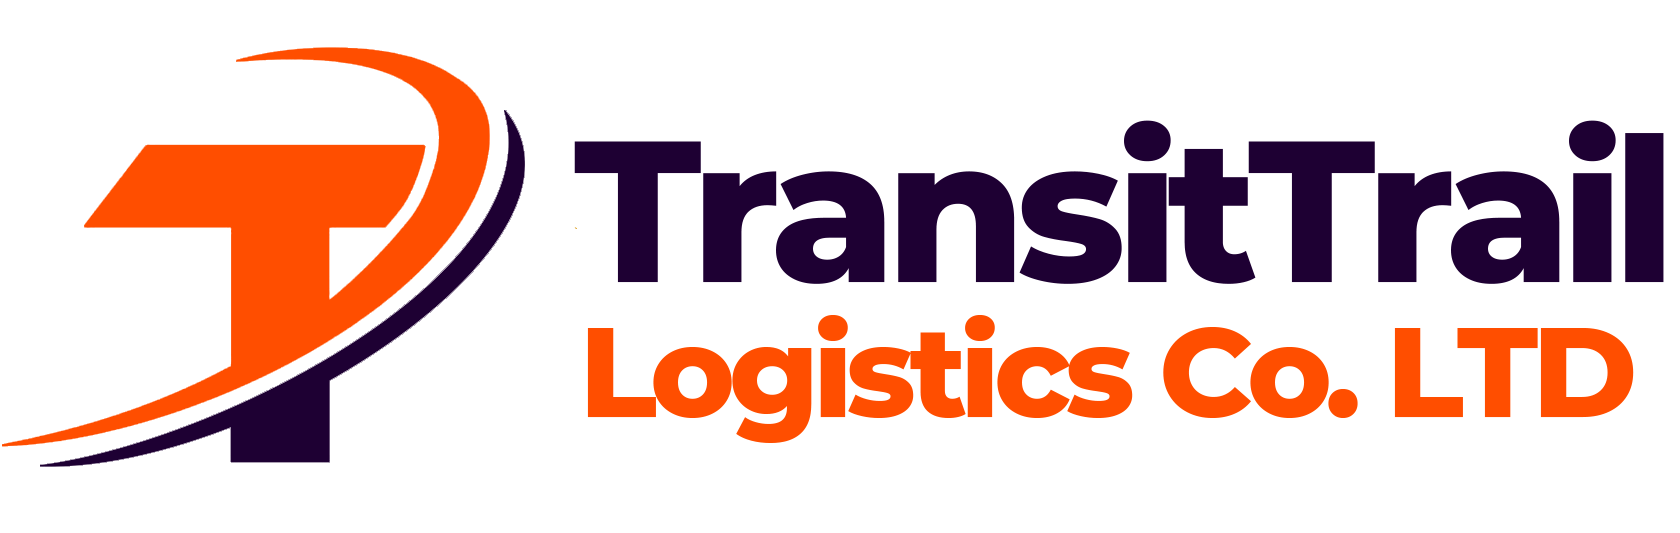 TransitTrail Logistics Company